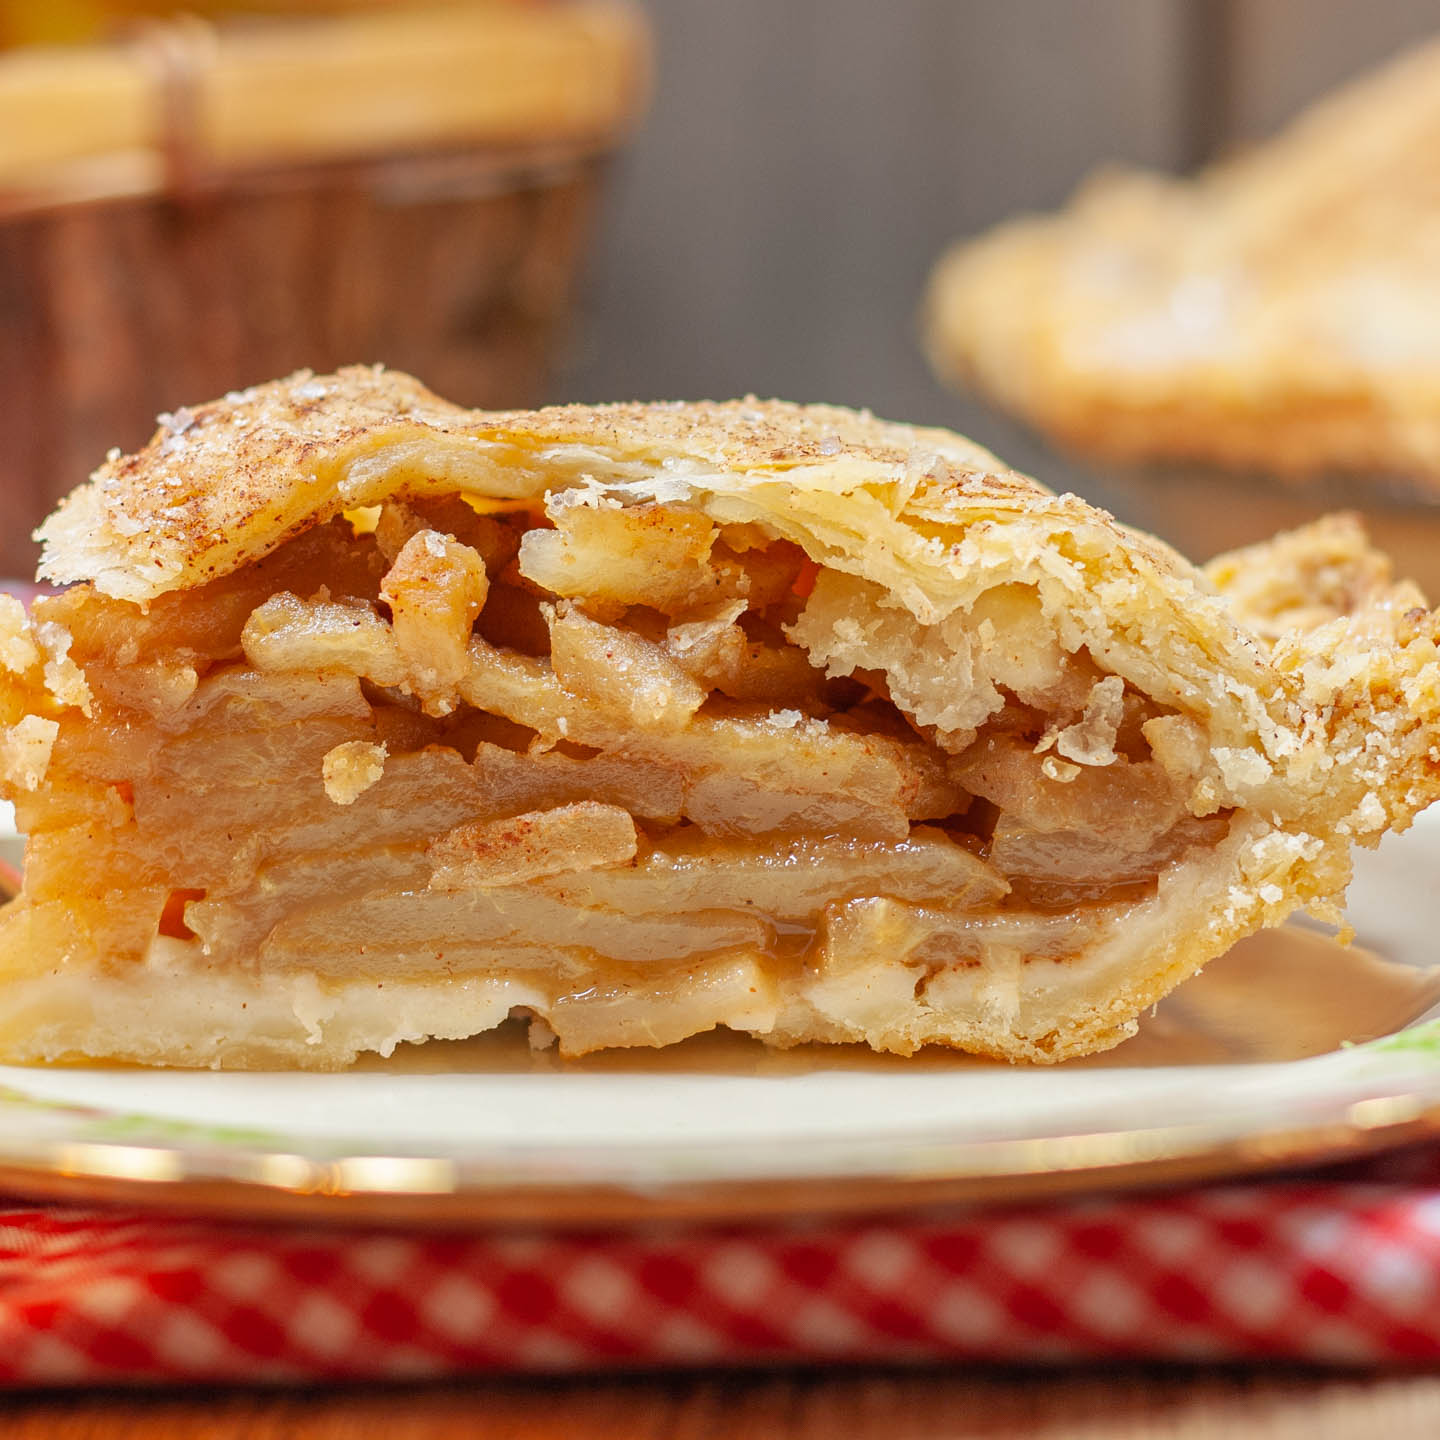 slice of apple pie on decorative plate.